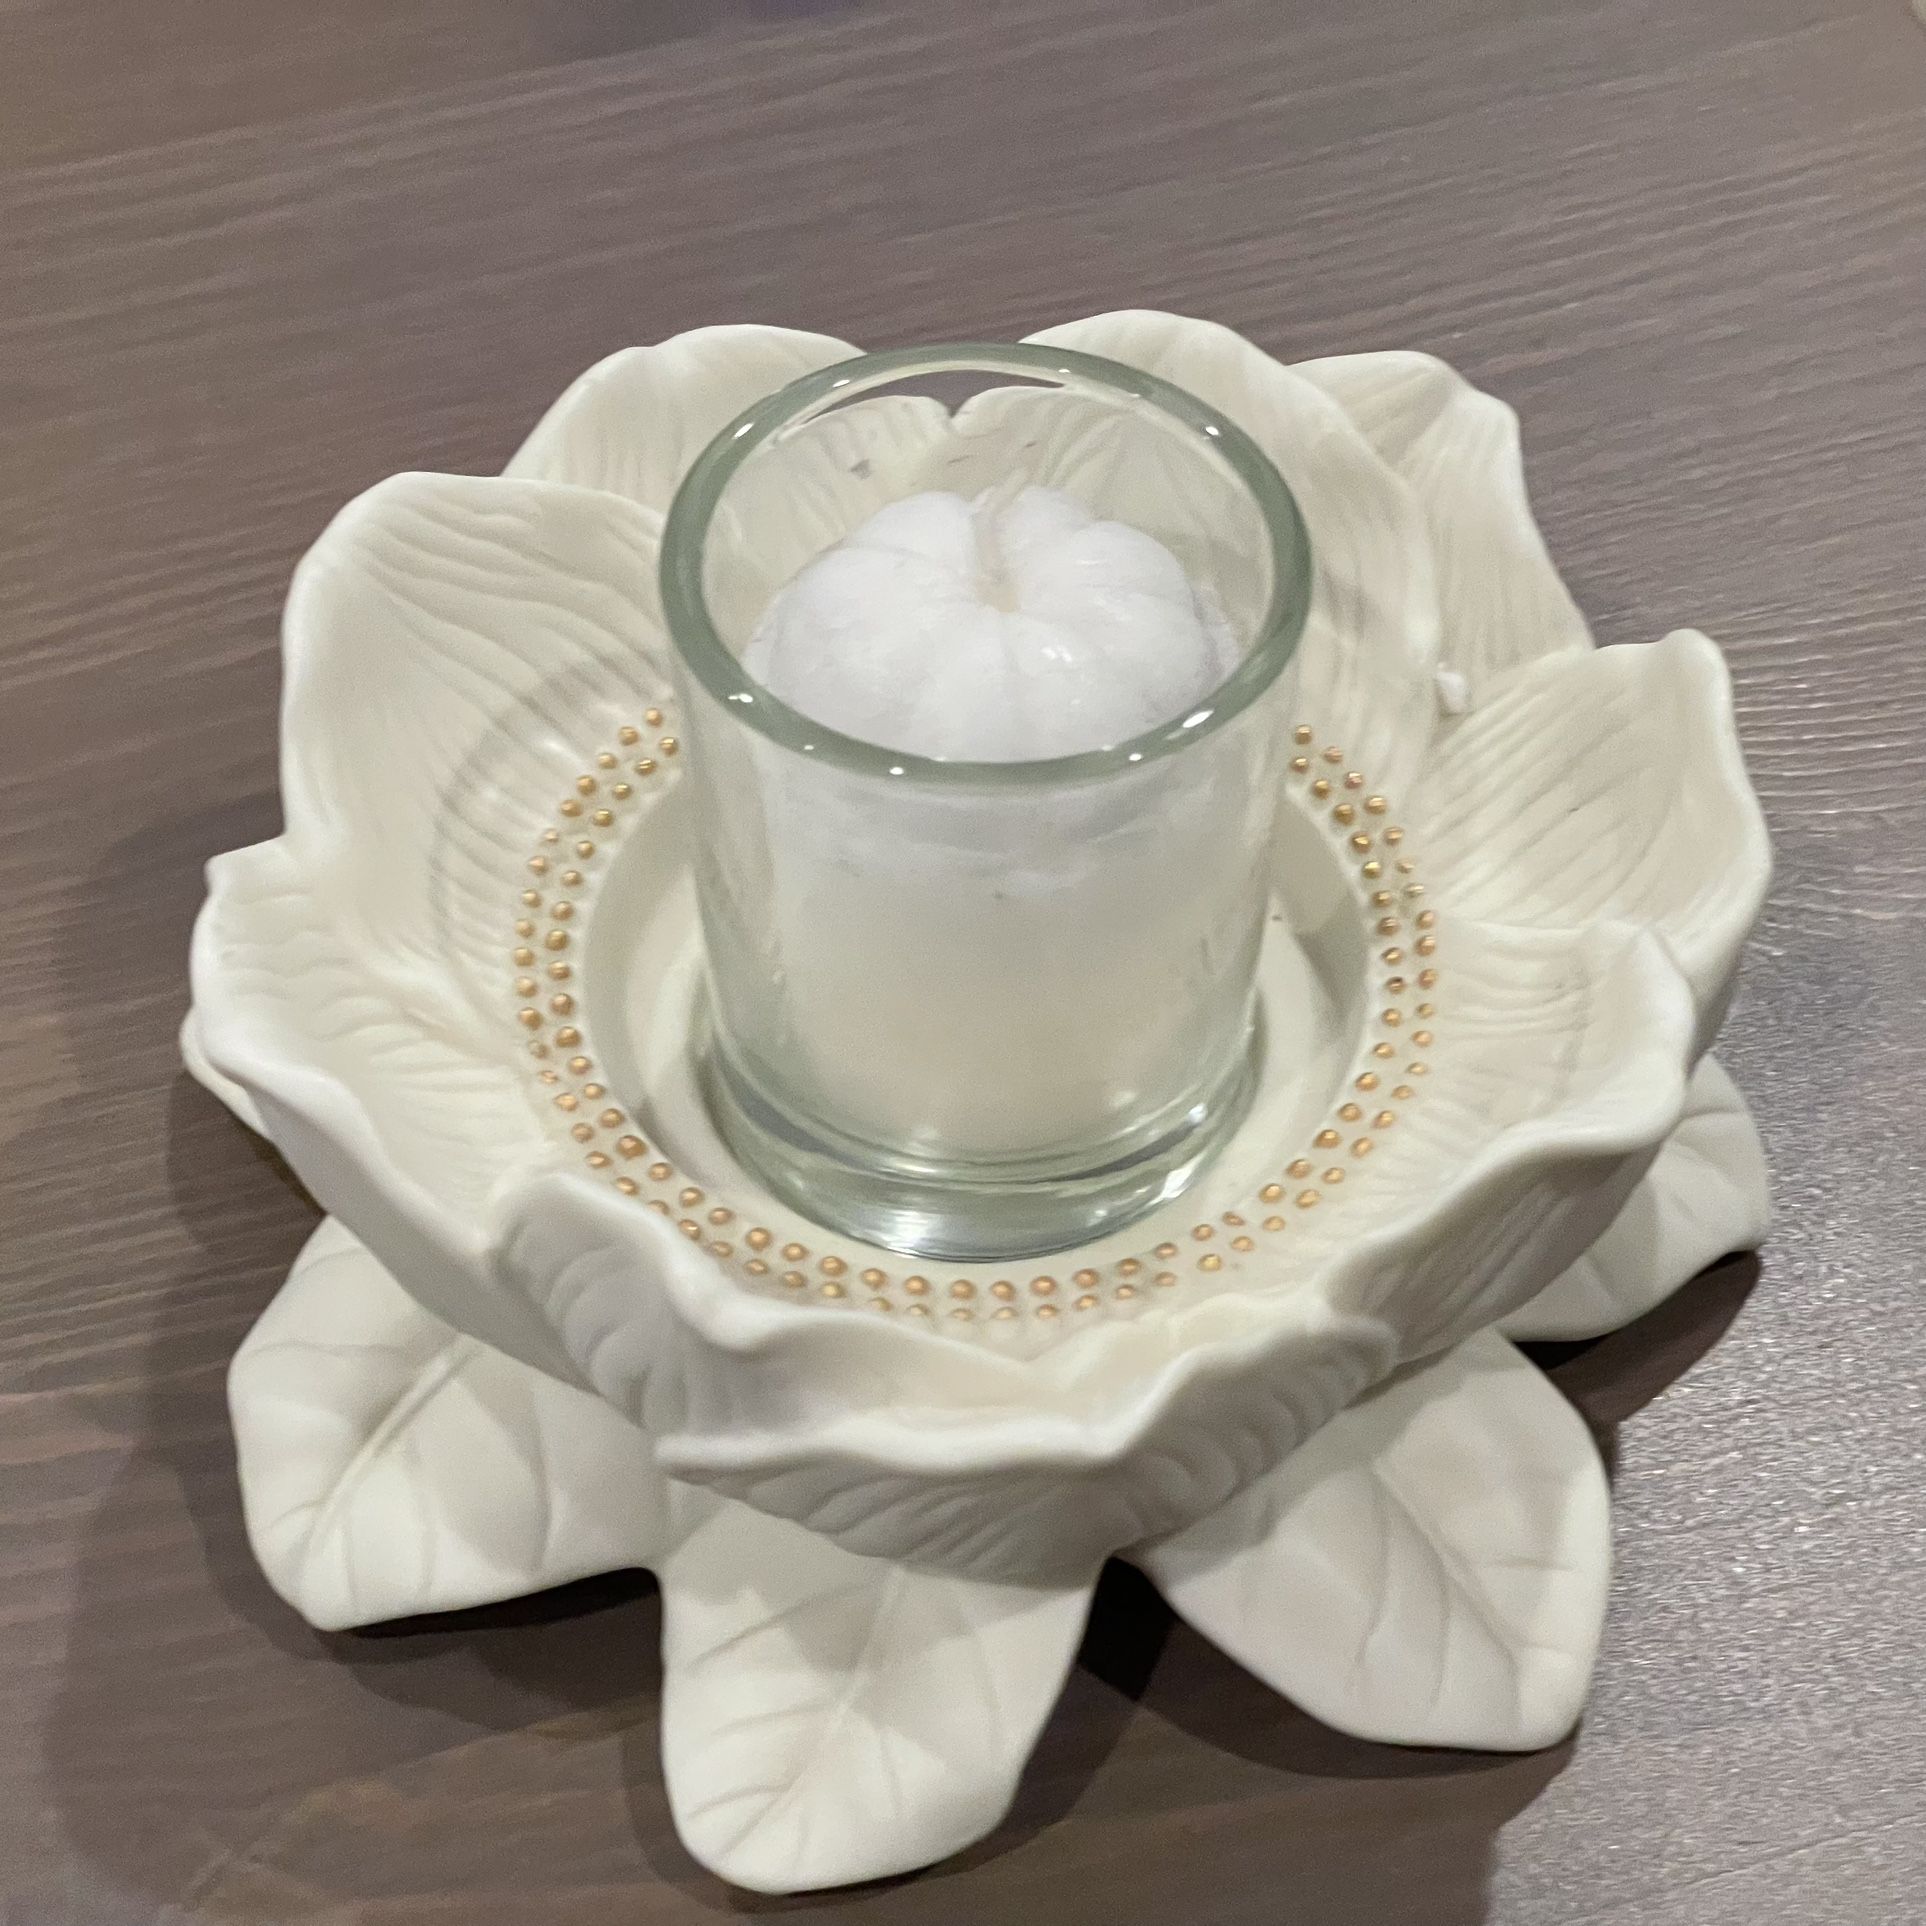 Vintage Partylite Bisque Porcelain Magnolia Lotus Flower Blossom Candle Holder w/ Pillar Candle